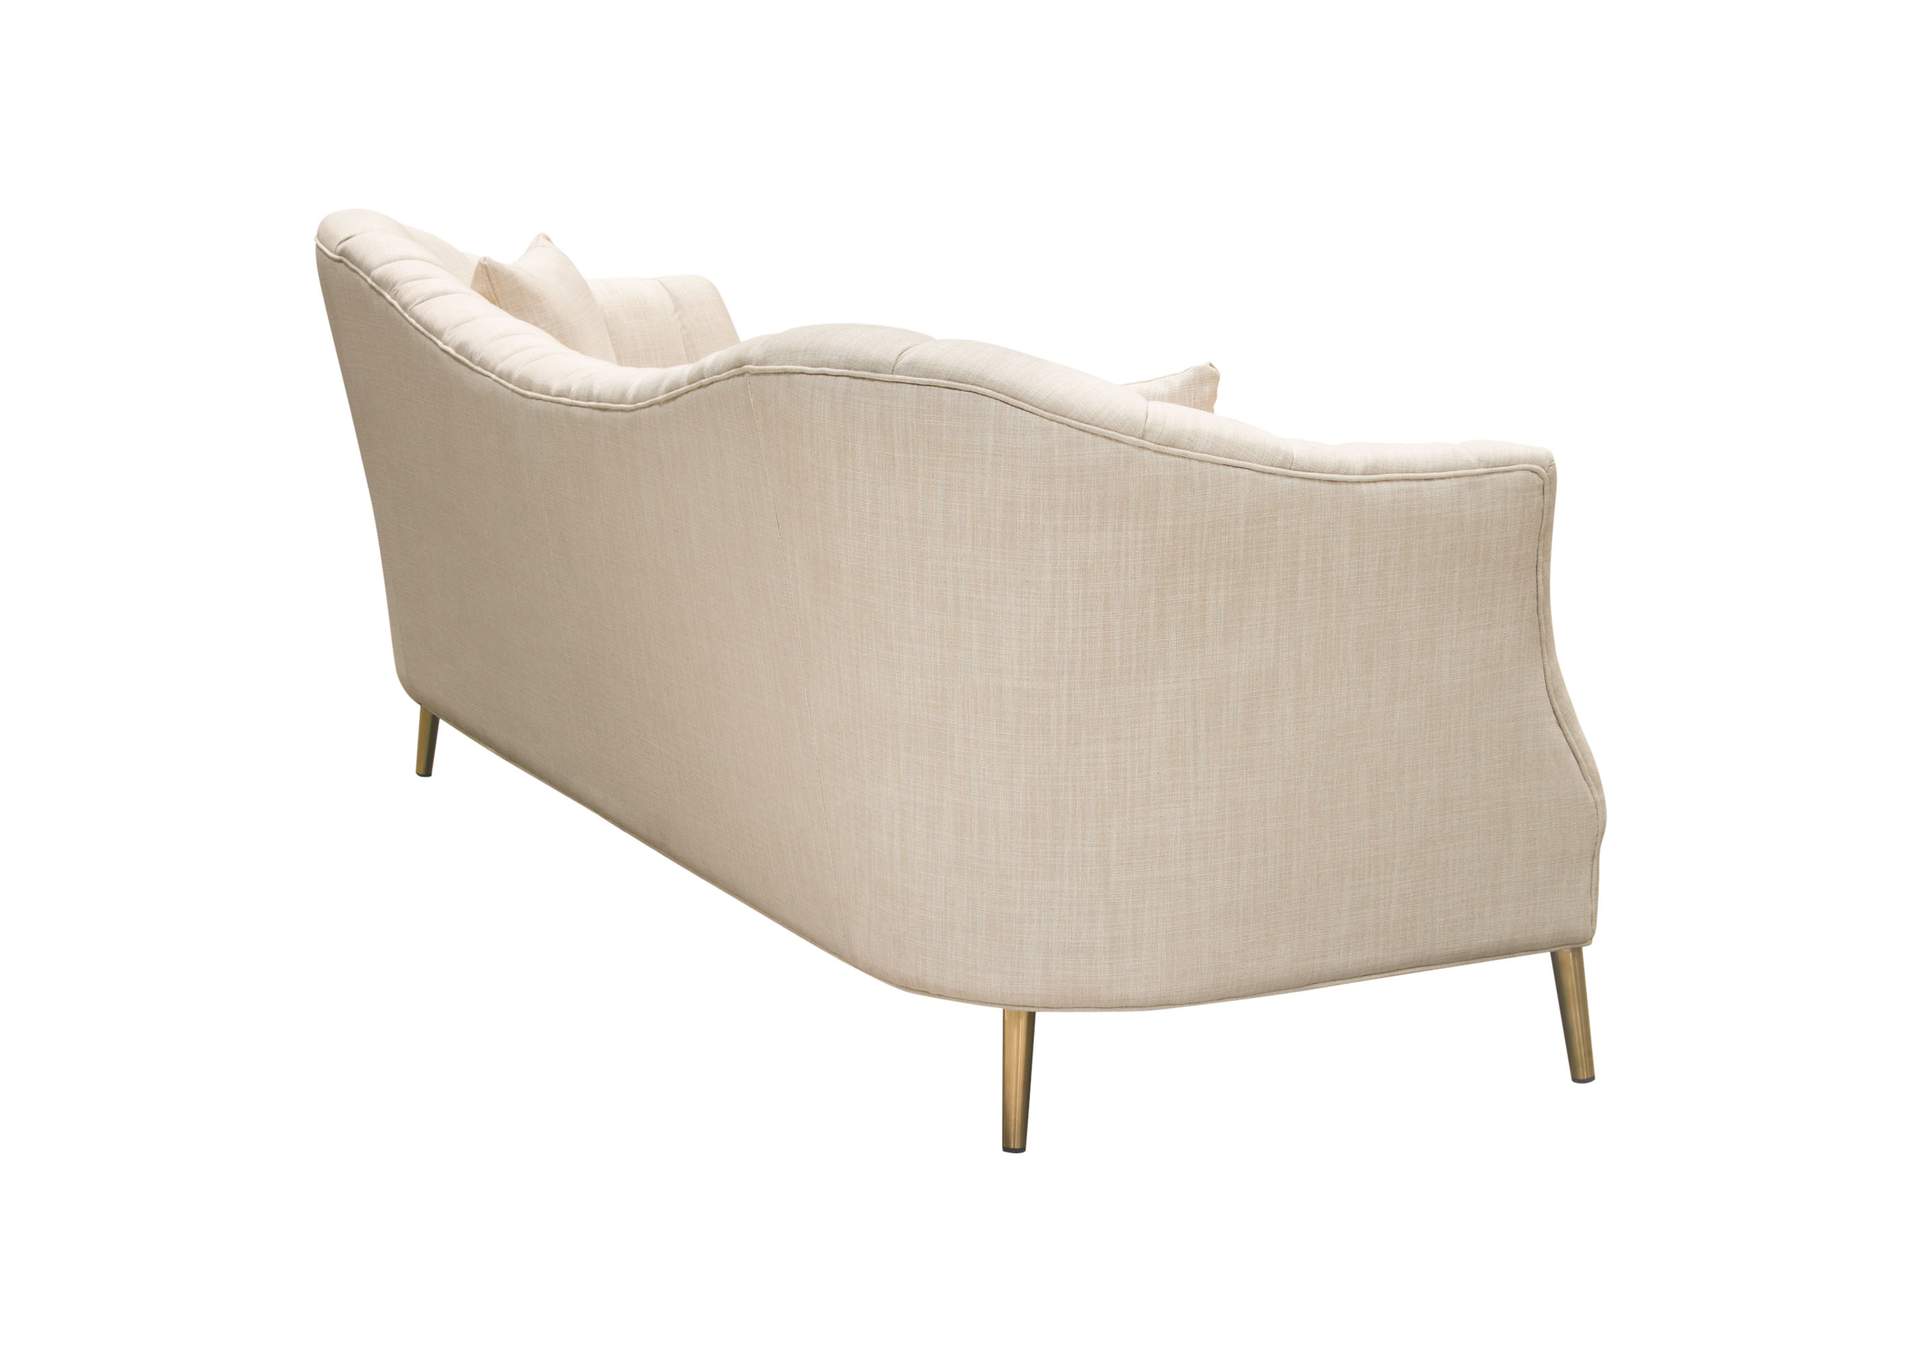 Ava Sofa in Sand Linen Fabric w/ Gold Leg by Diamond Sofa,Diamond Sofa